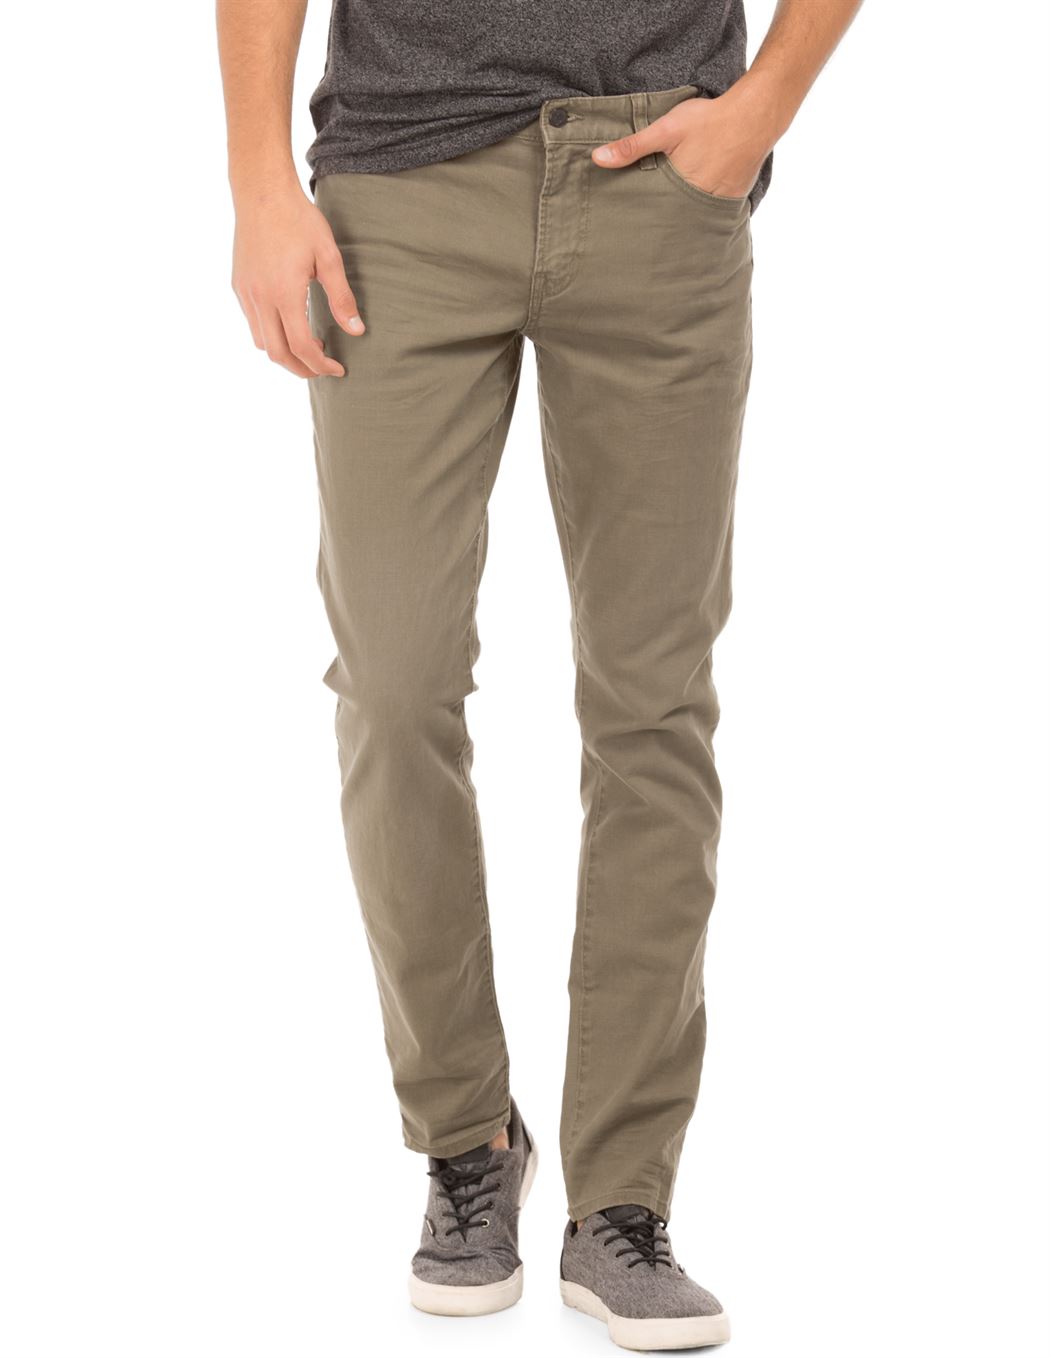 D&G brown jeans for men, Men's Fashion, Bottoms, Jeans on Carousell-nttc.com.vn